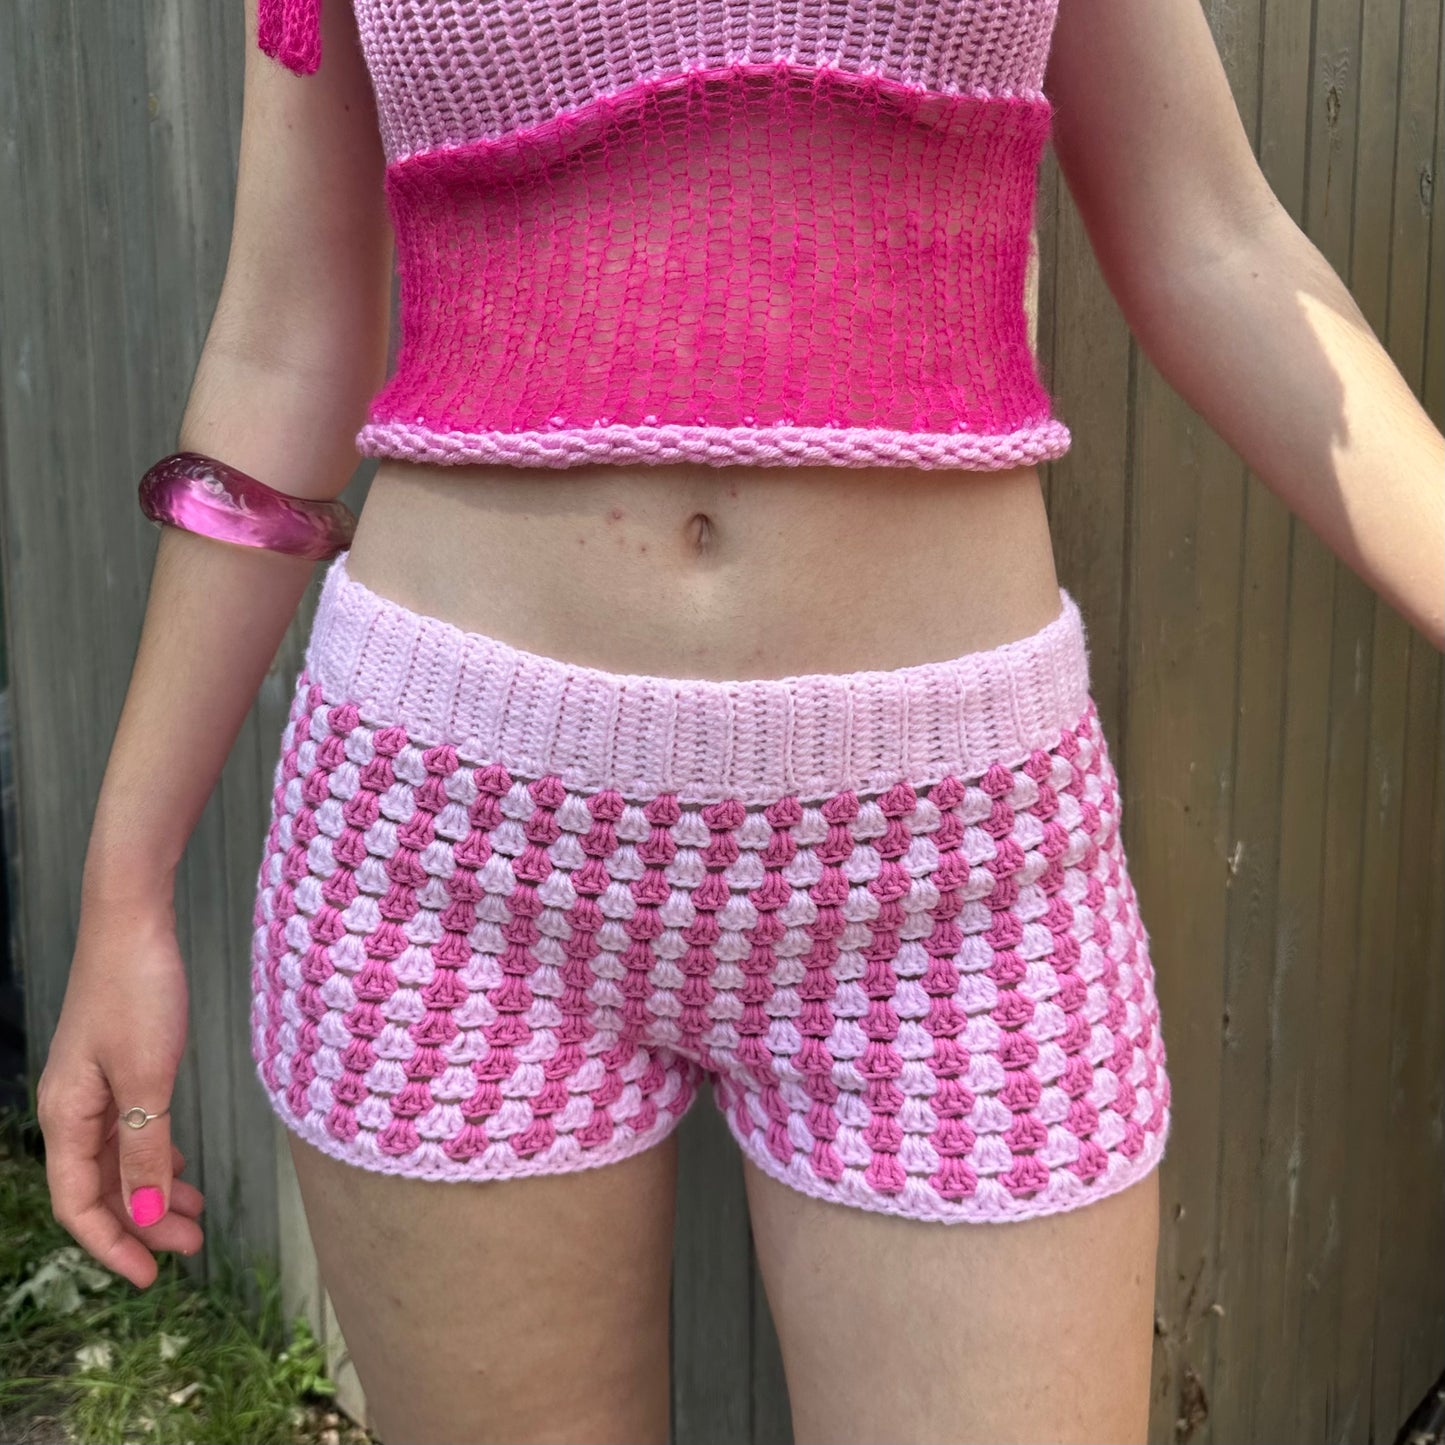 The Barbie Shorts 🎀 - handmade pink crochet shorts